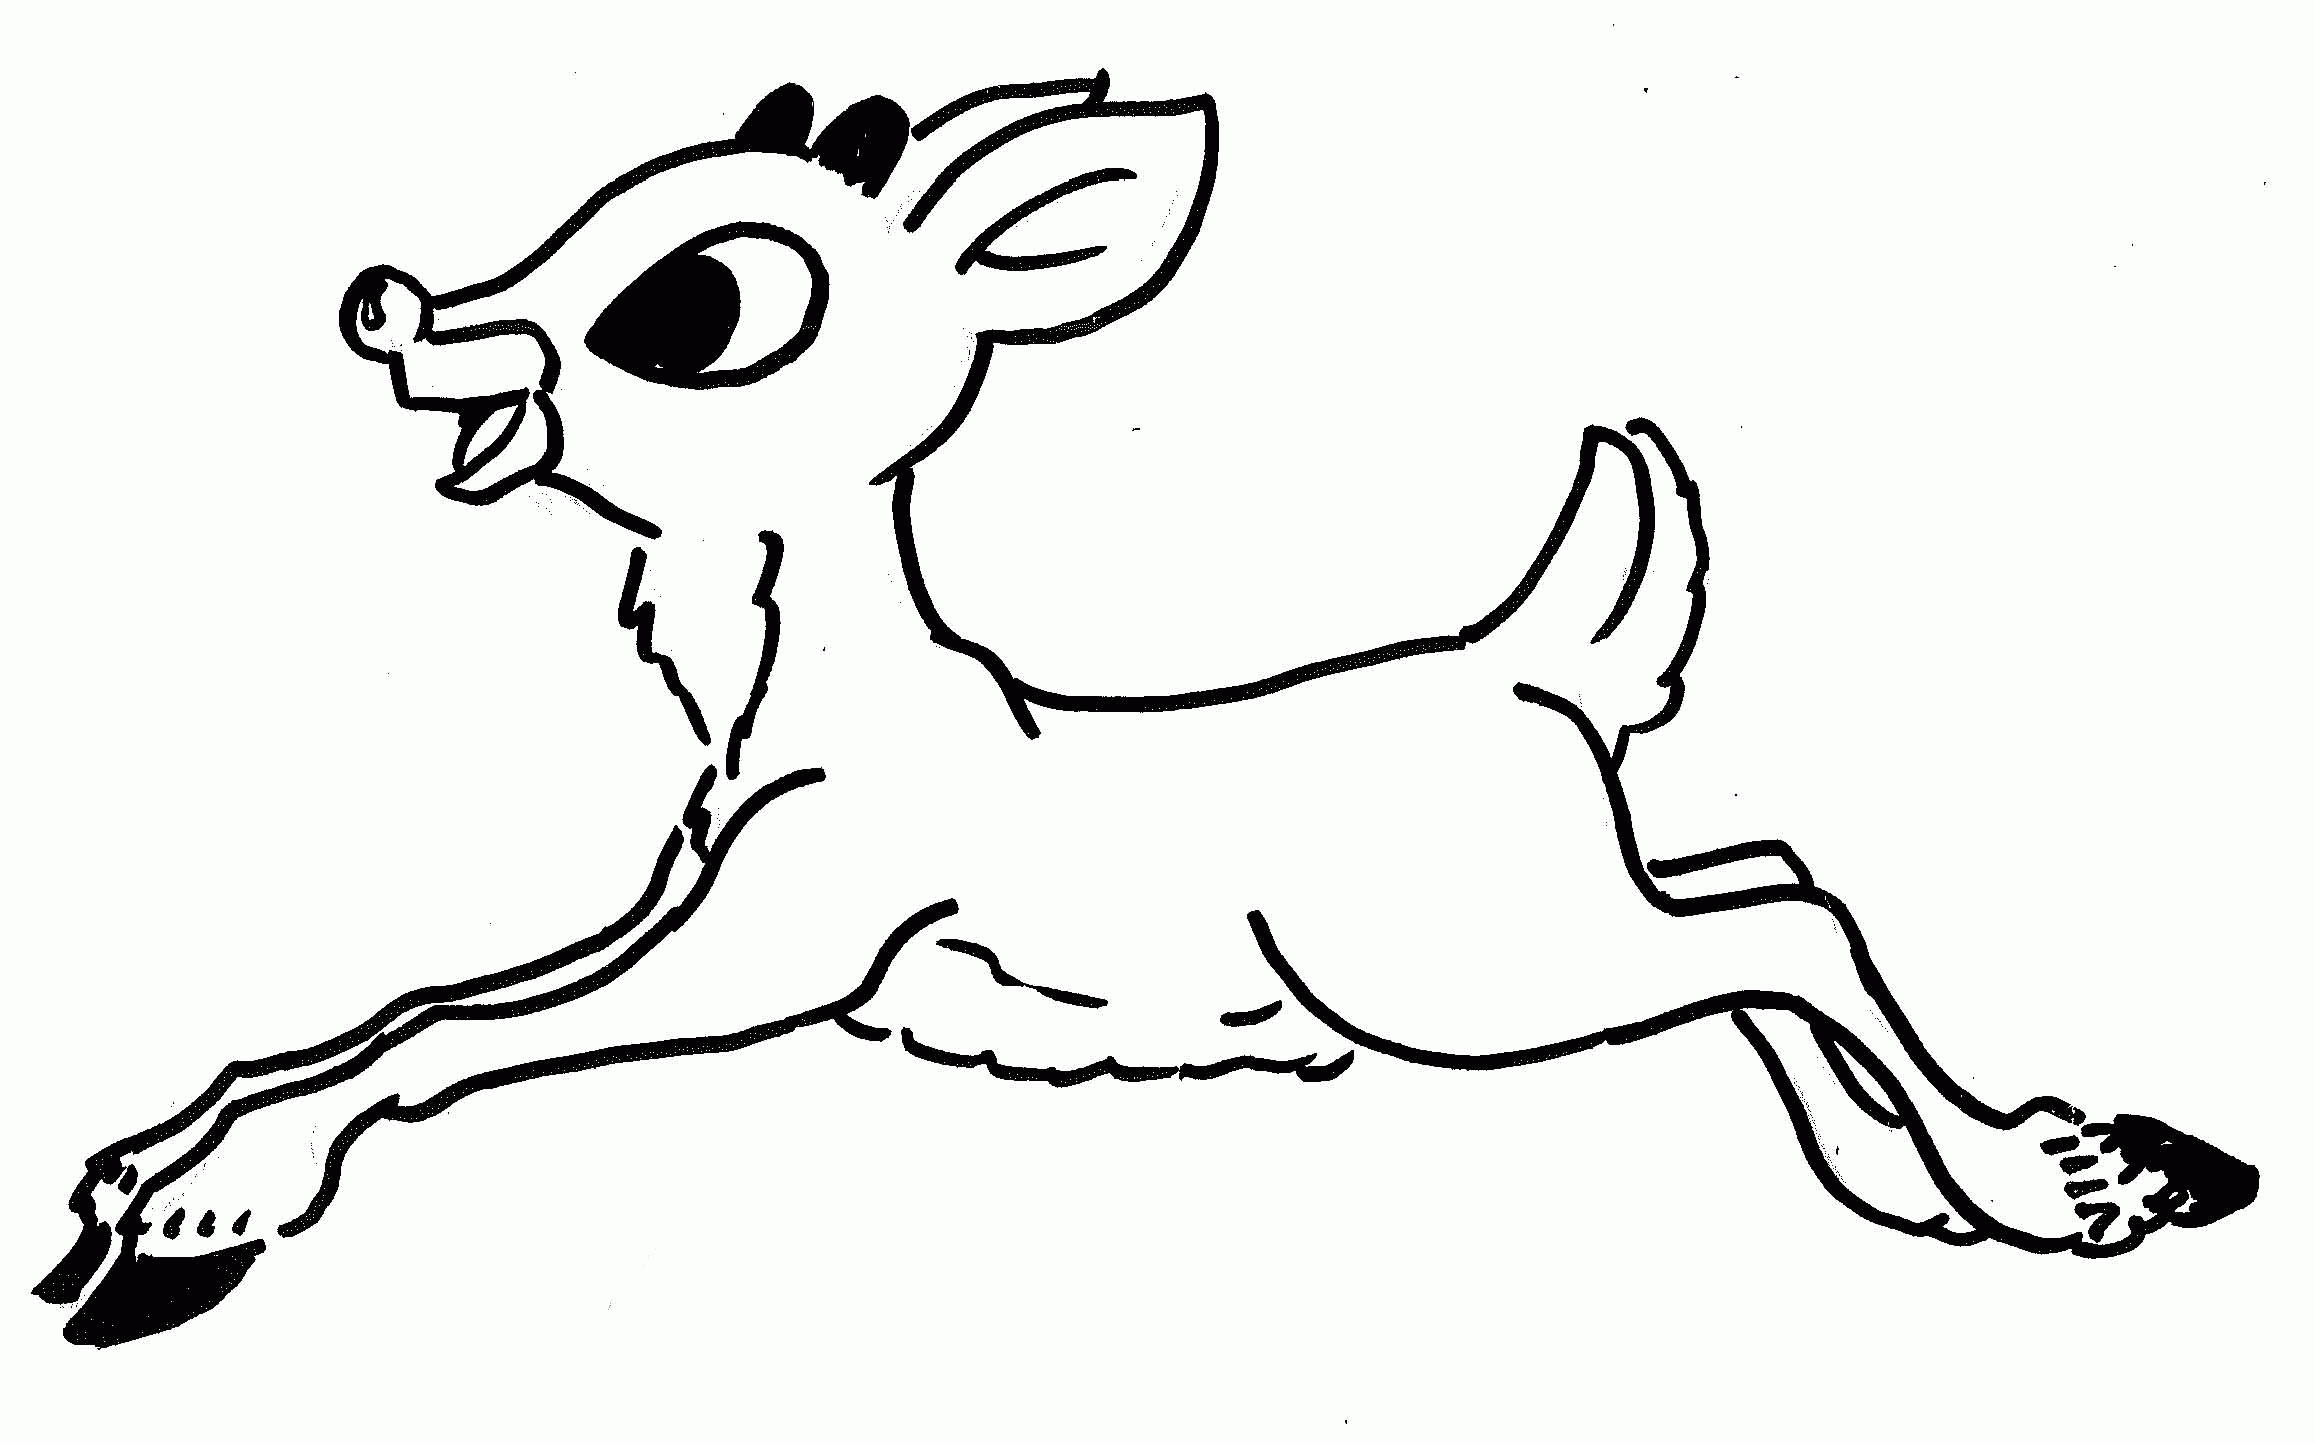 Free Reindeer Head Coloring Pages, Download Free Reindeer Head Coloring